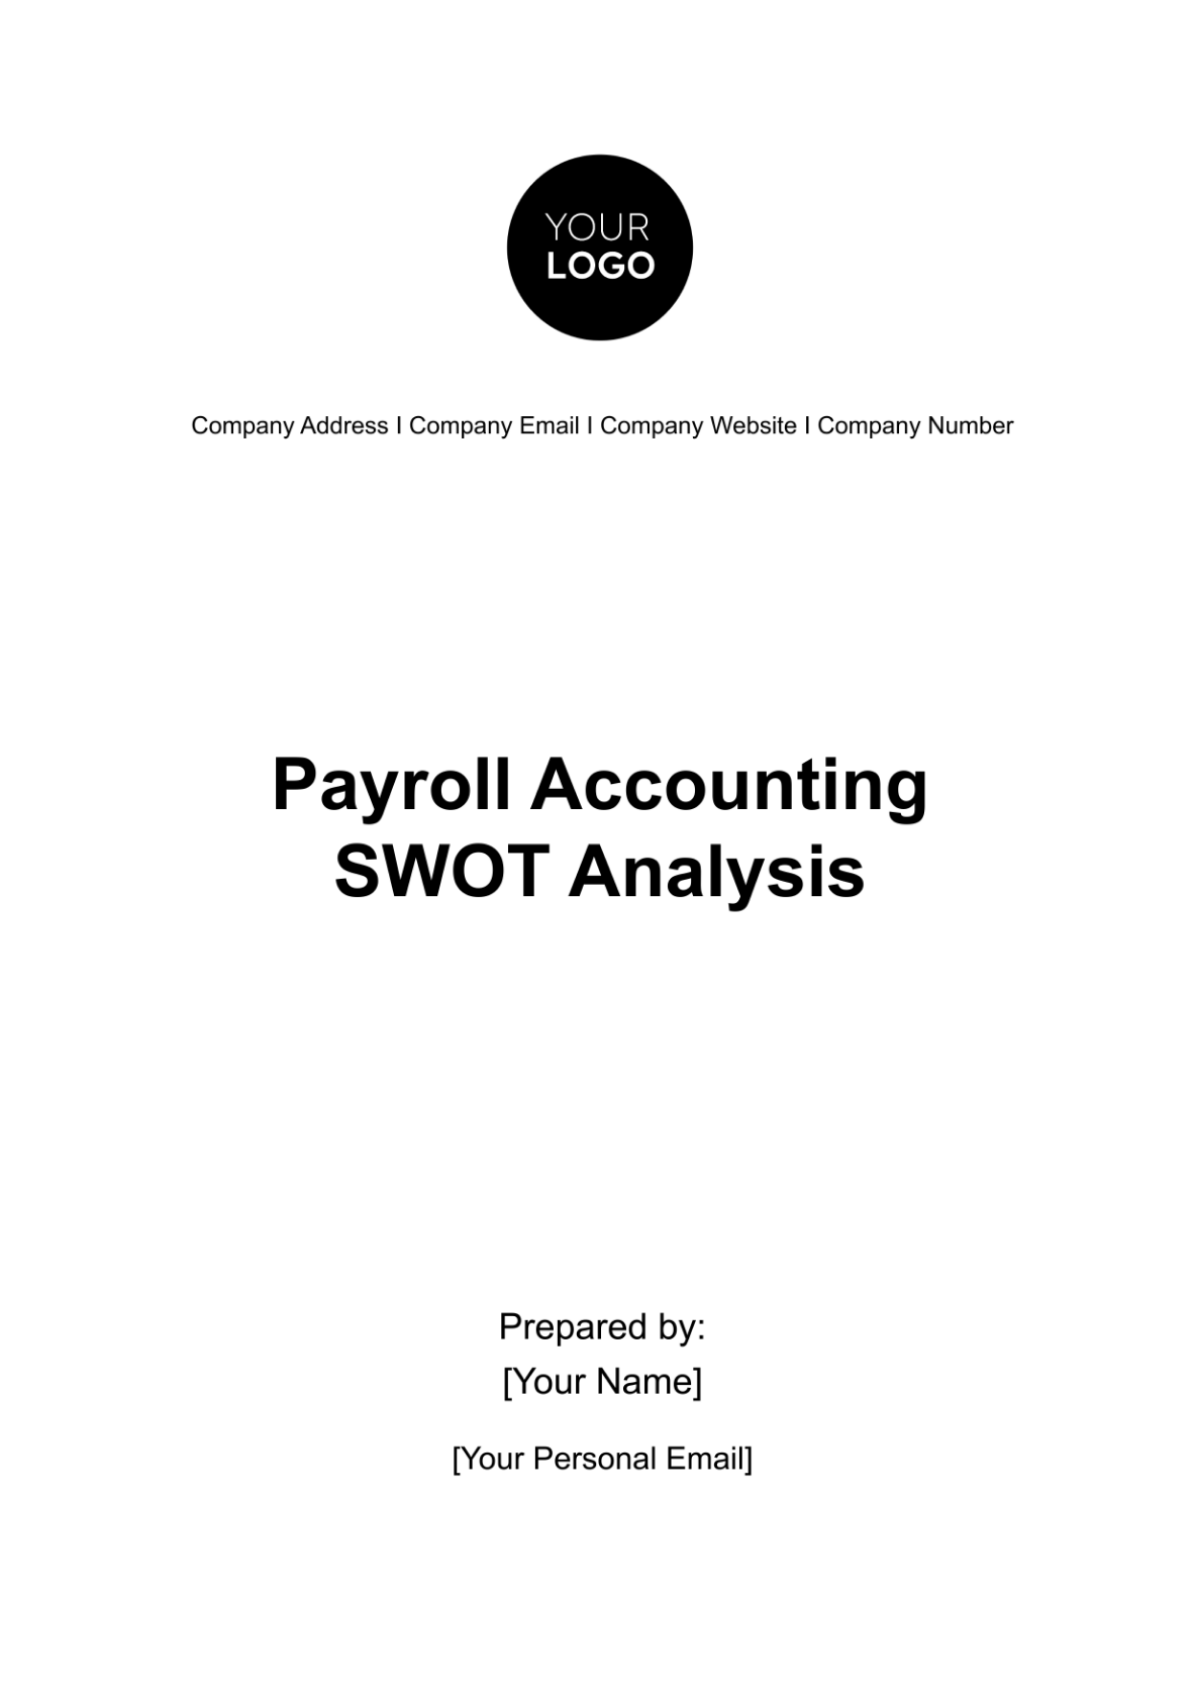 Payroll Accounting SWOT Analysis Template